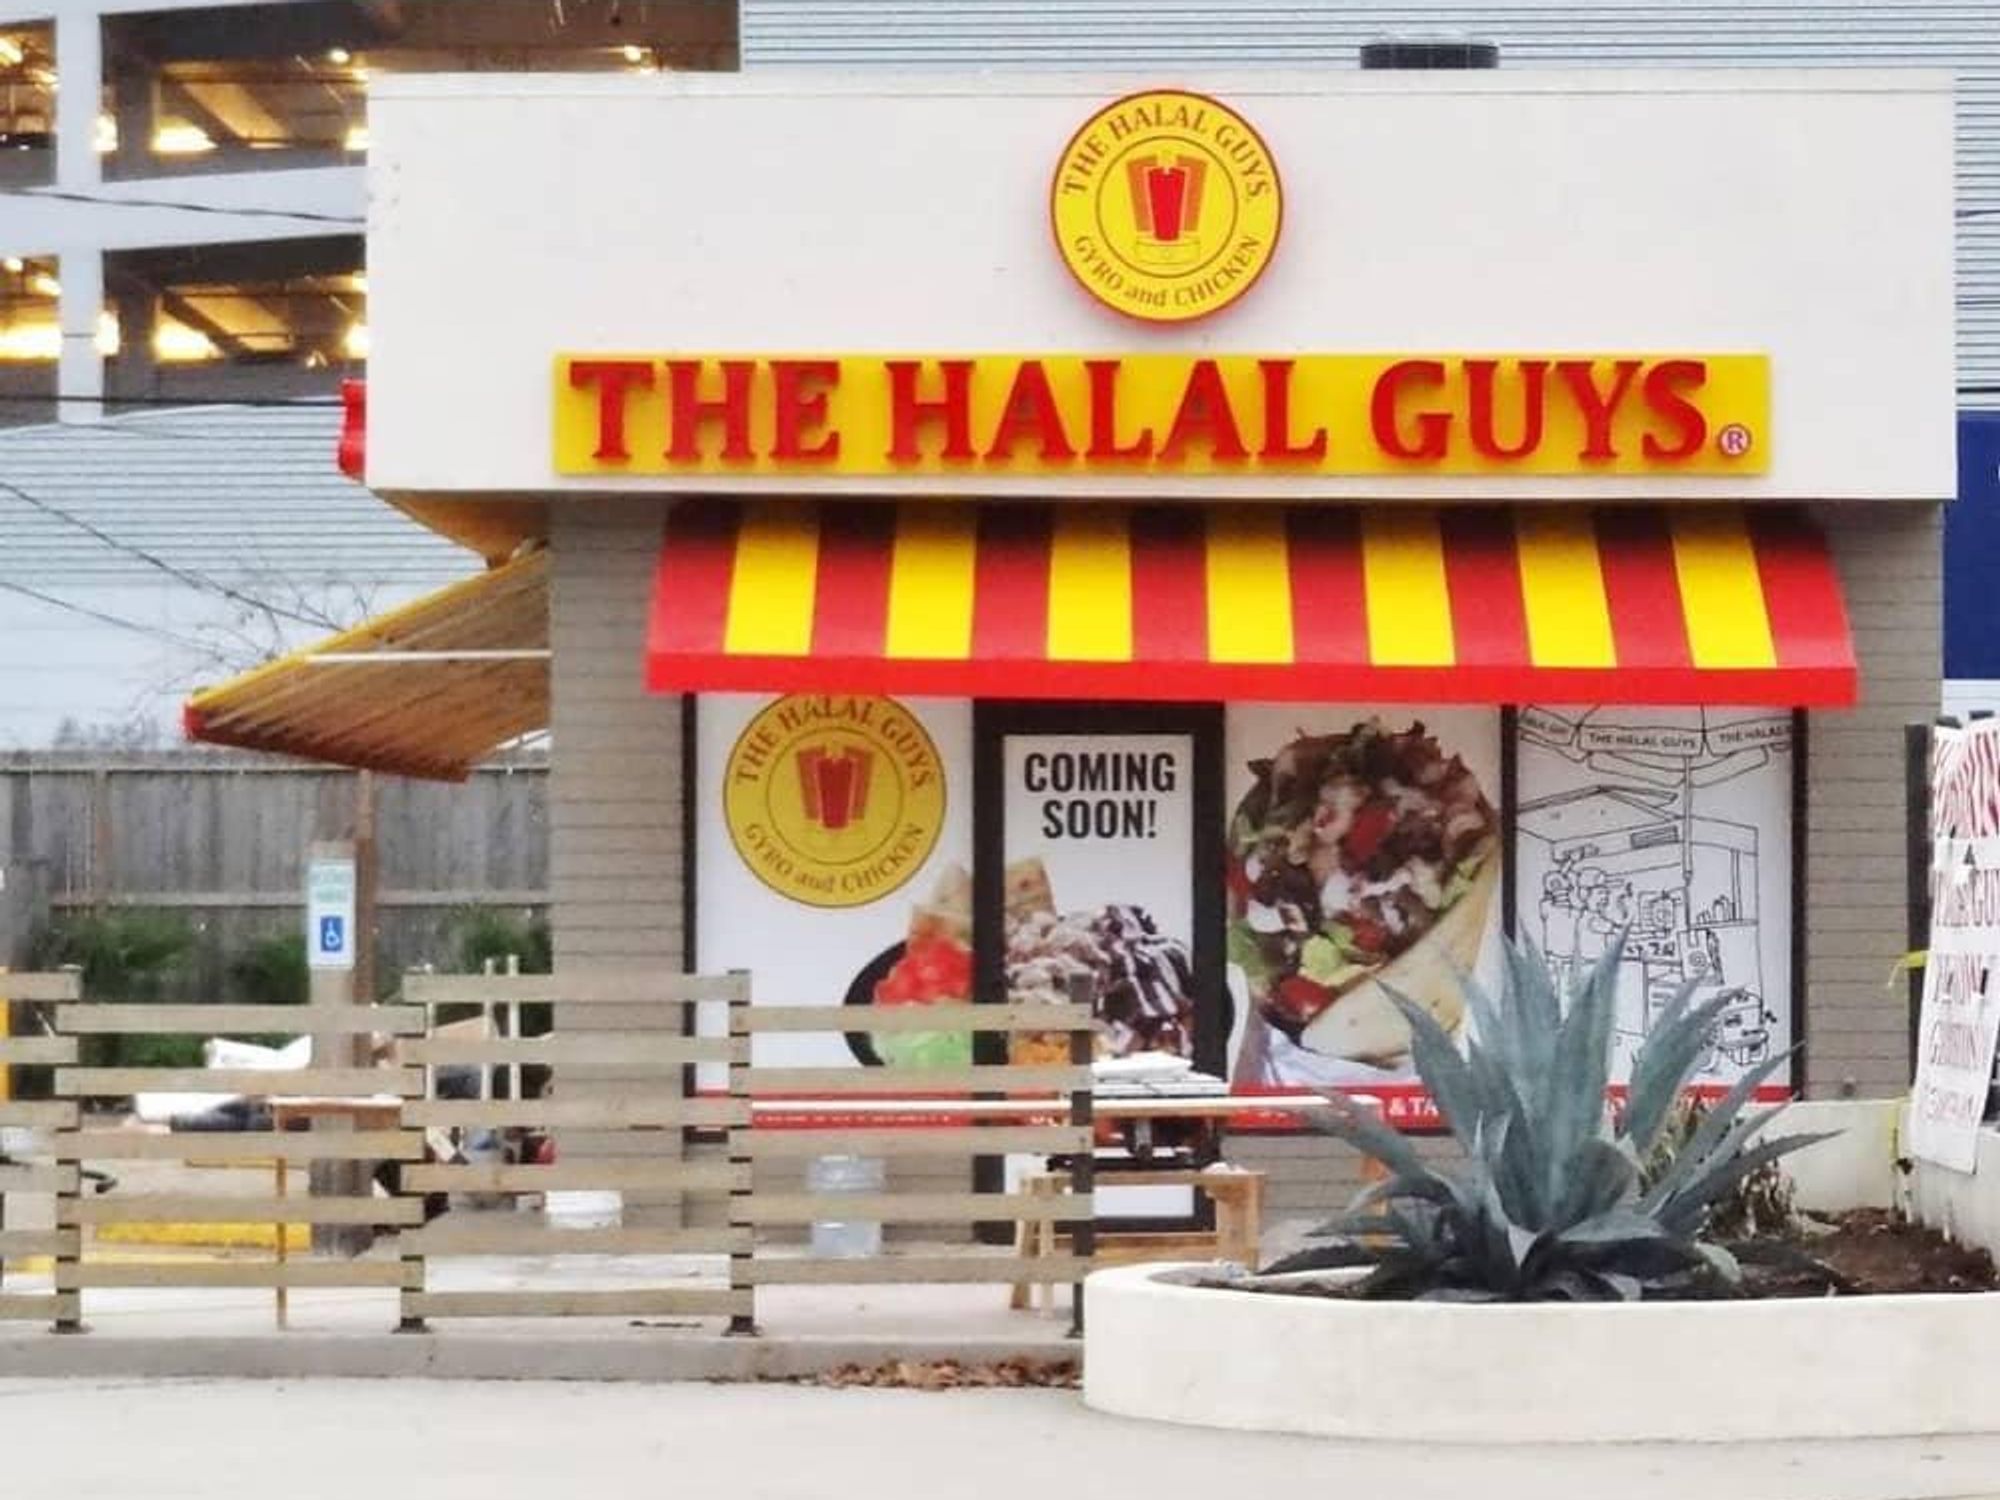 The Halal Guys Houston exterior